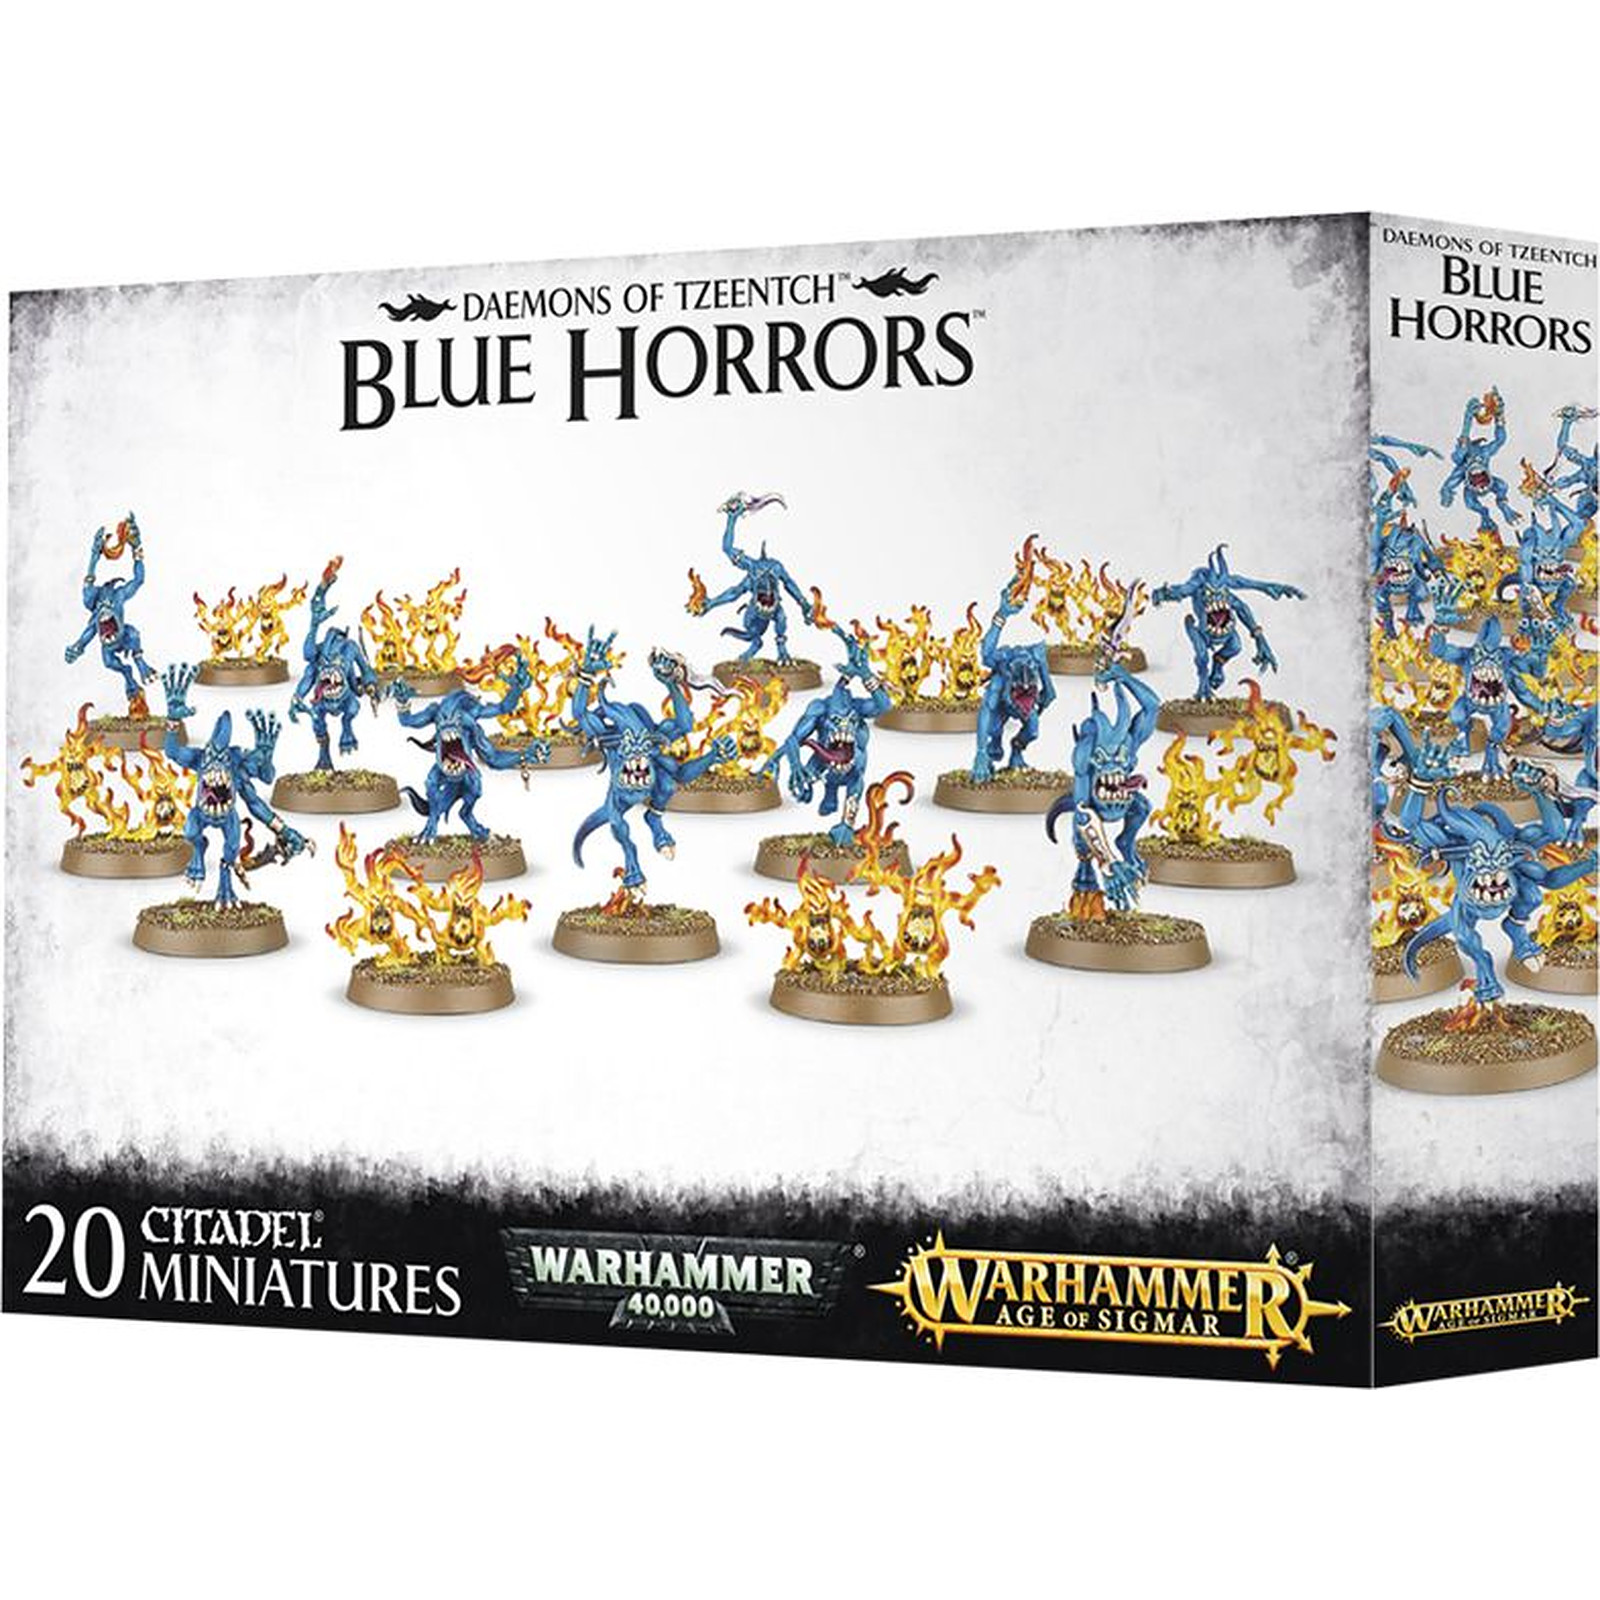 Warhammer AoS & 40k . - Chaos Daemons Horreurs Bleu et Horreurs Brimstone de Tzeench - Jeux de figurines Games workshop